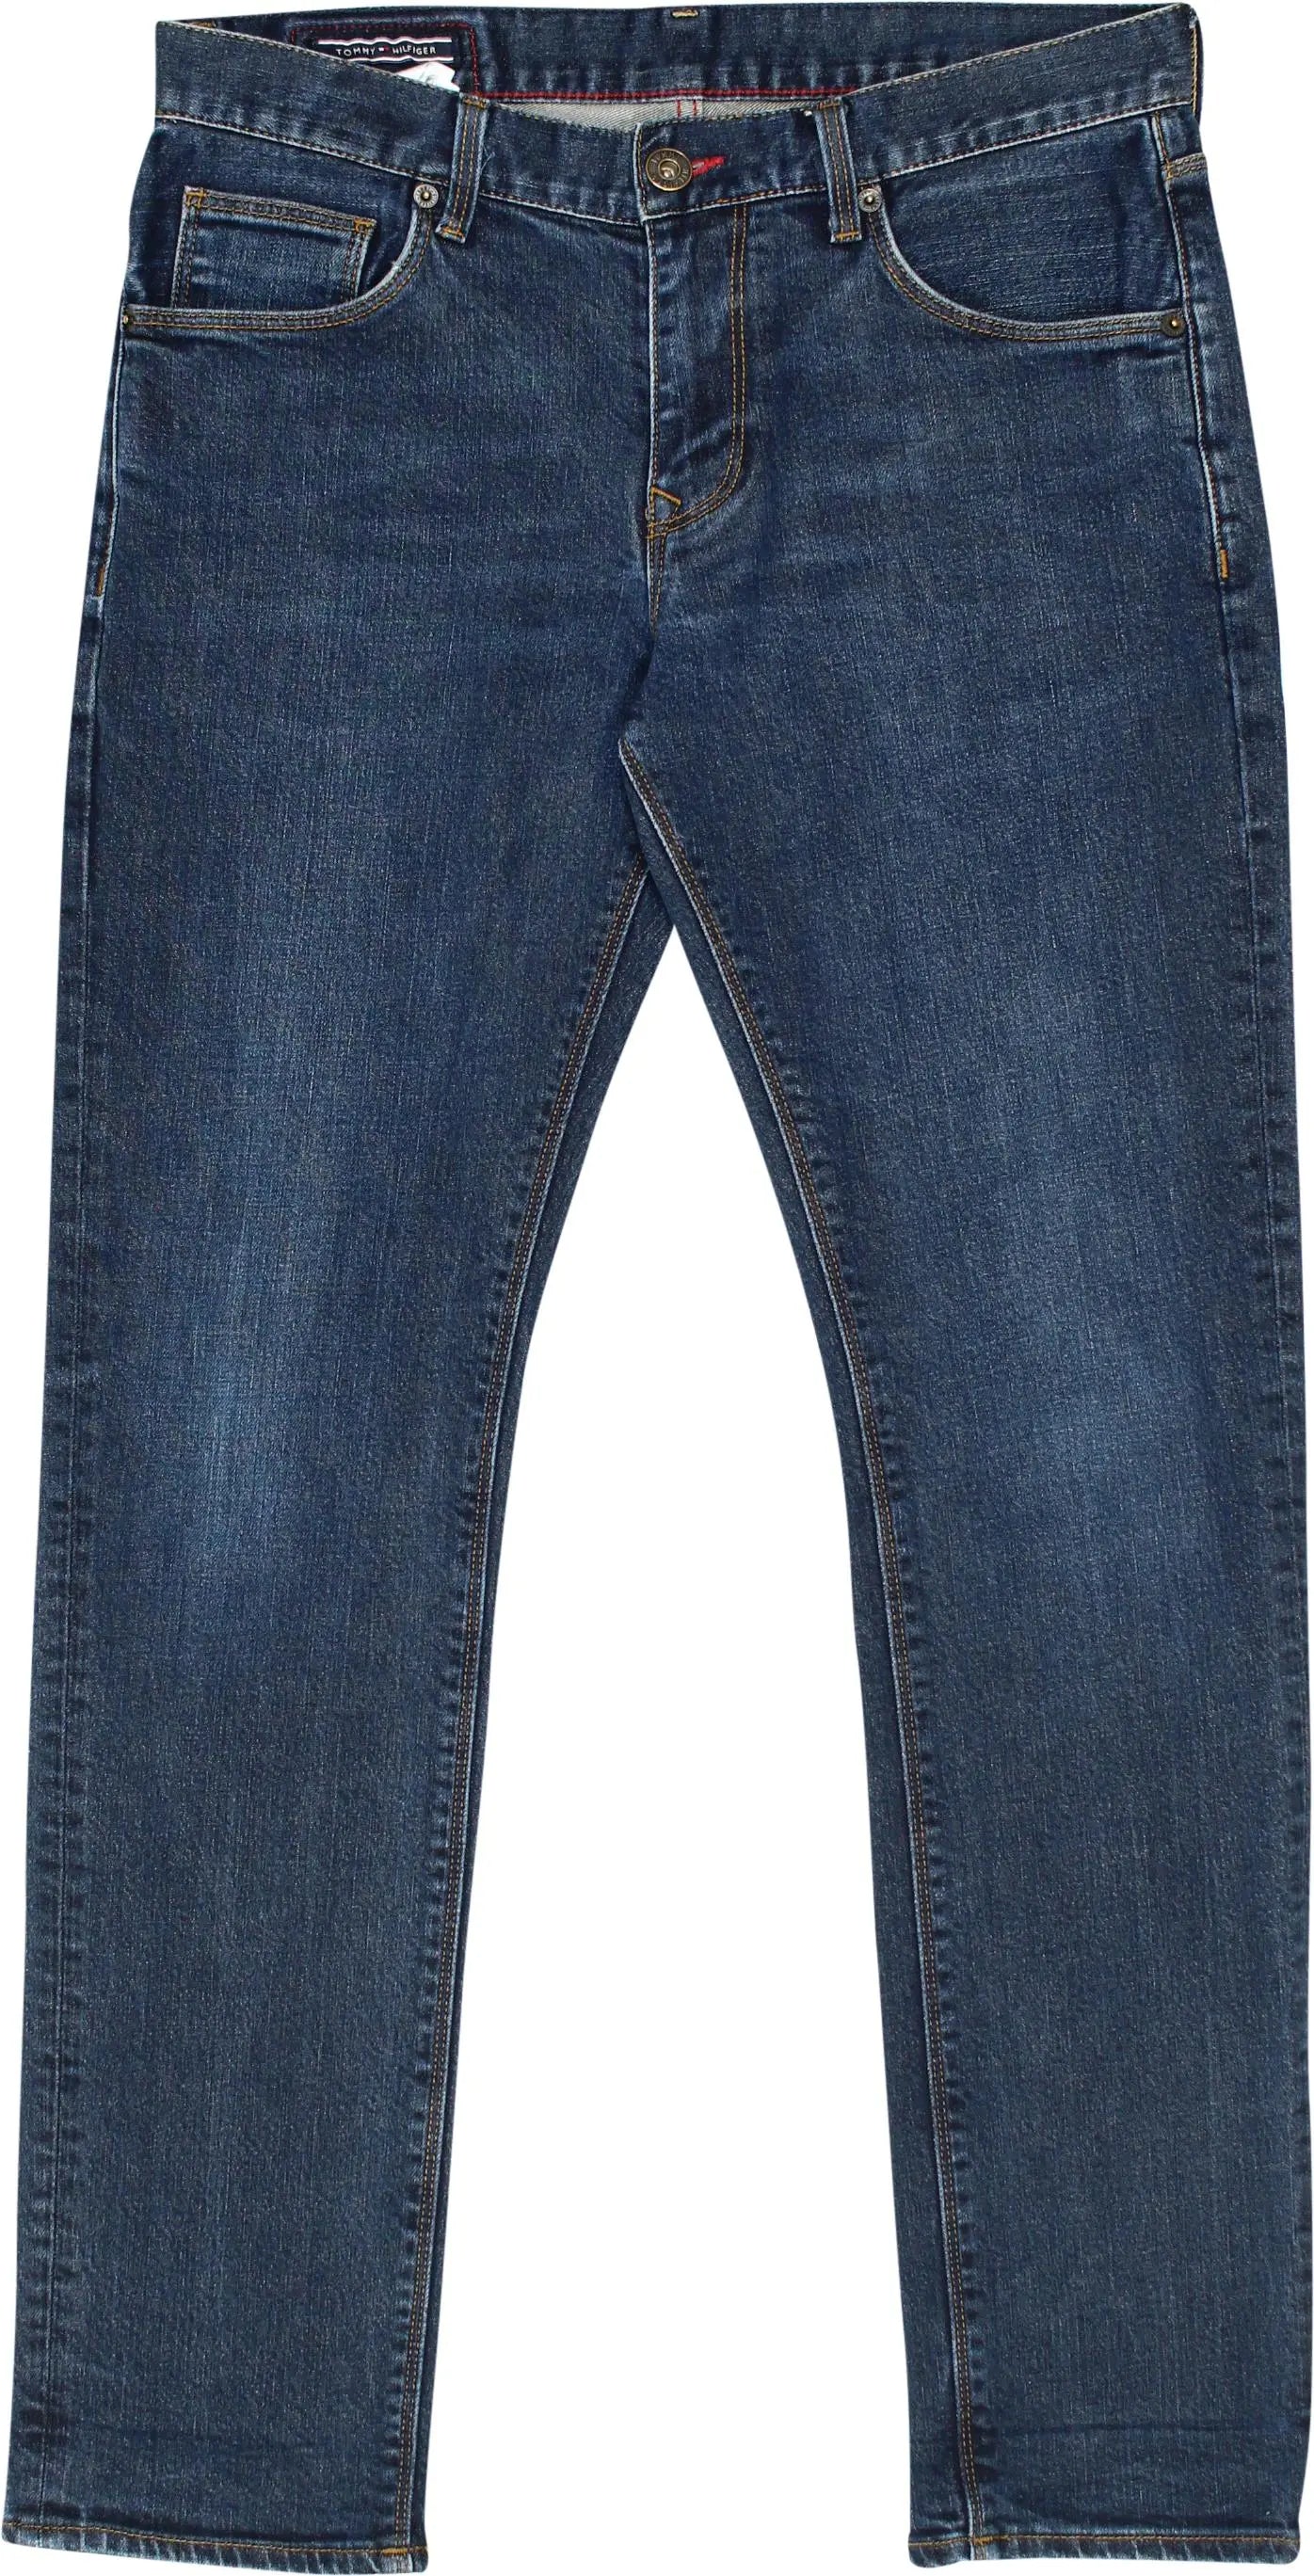 Tommy Hilfiger - Tommy Hilfiger Slim Fit Jeans- ThriftTale.com - Vintage and second handclothing